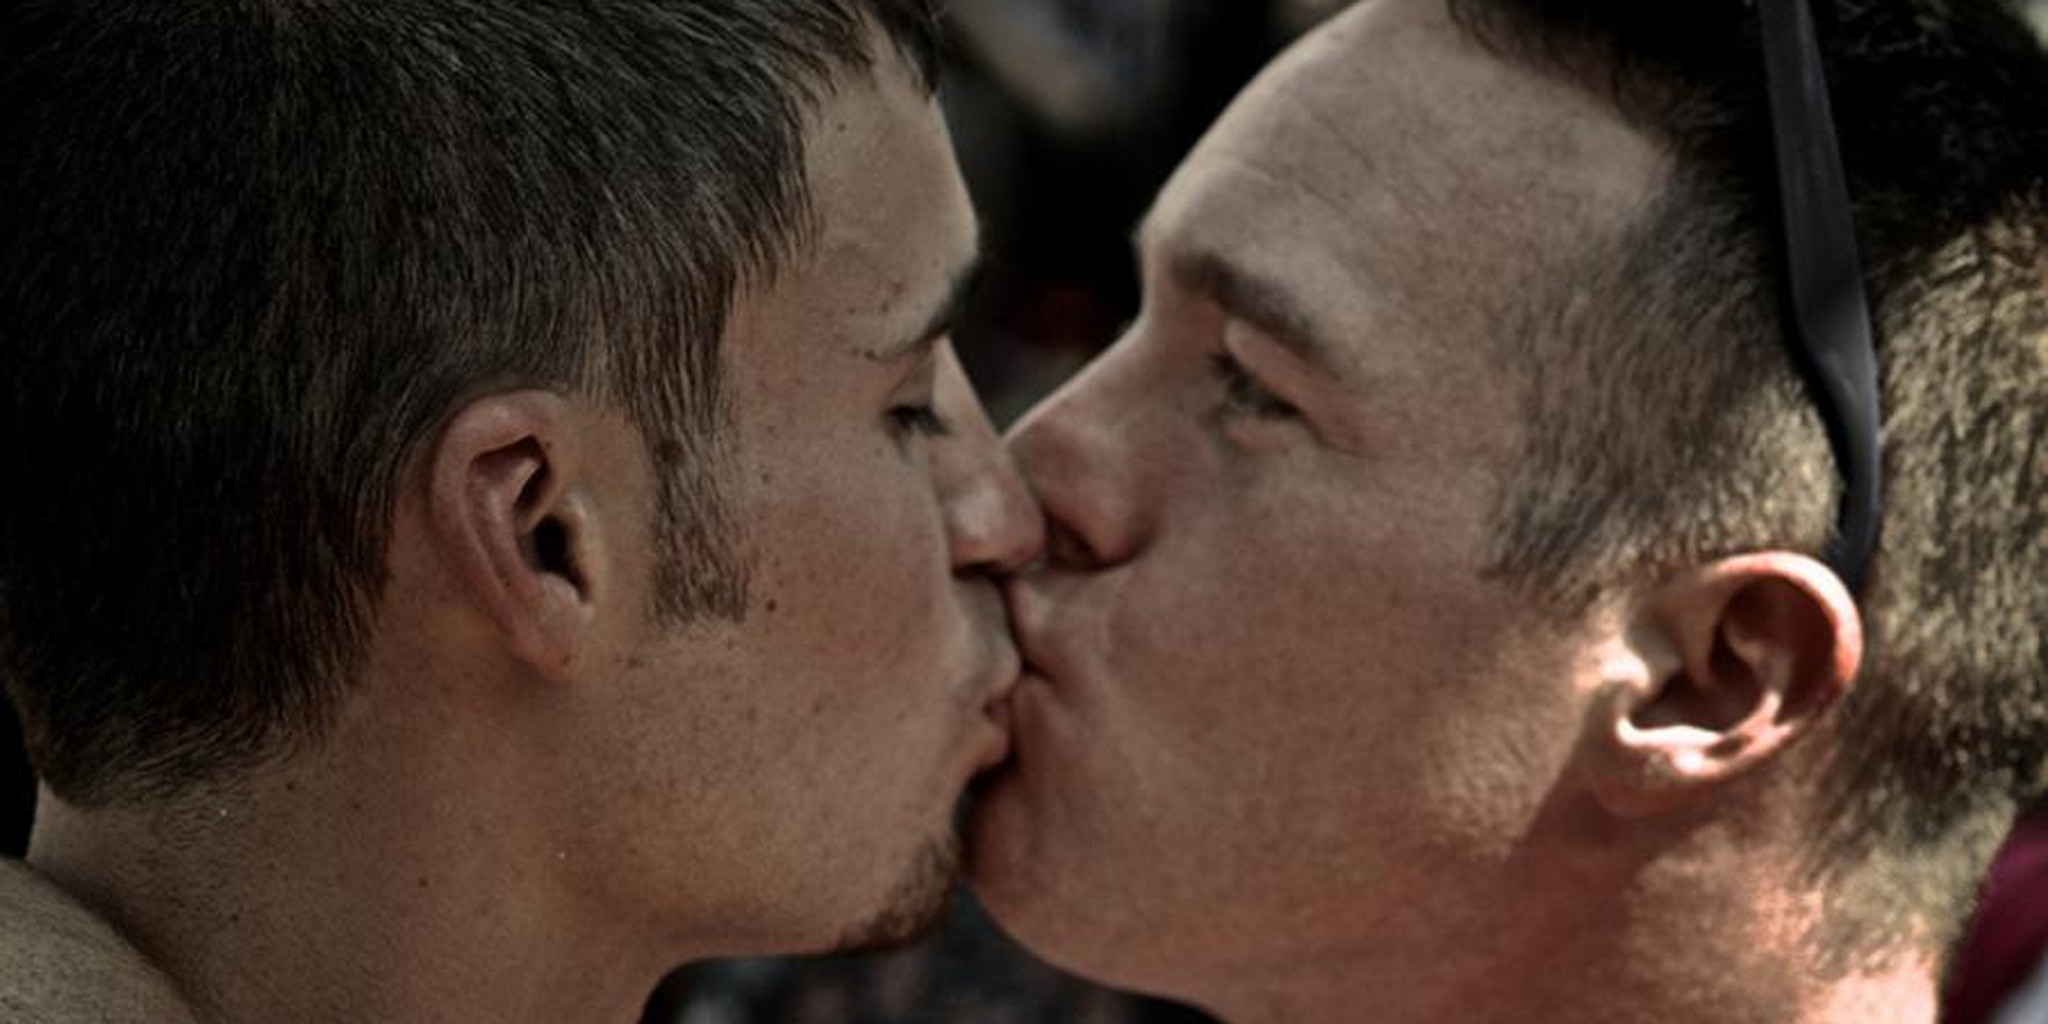 2 gay men kissing